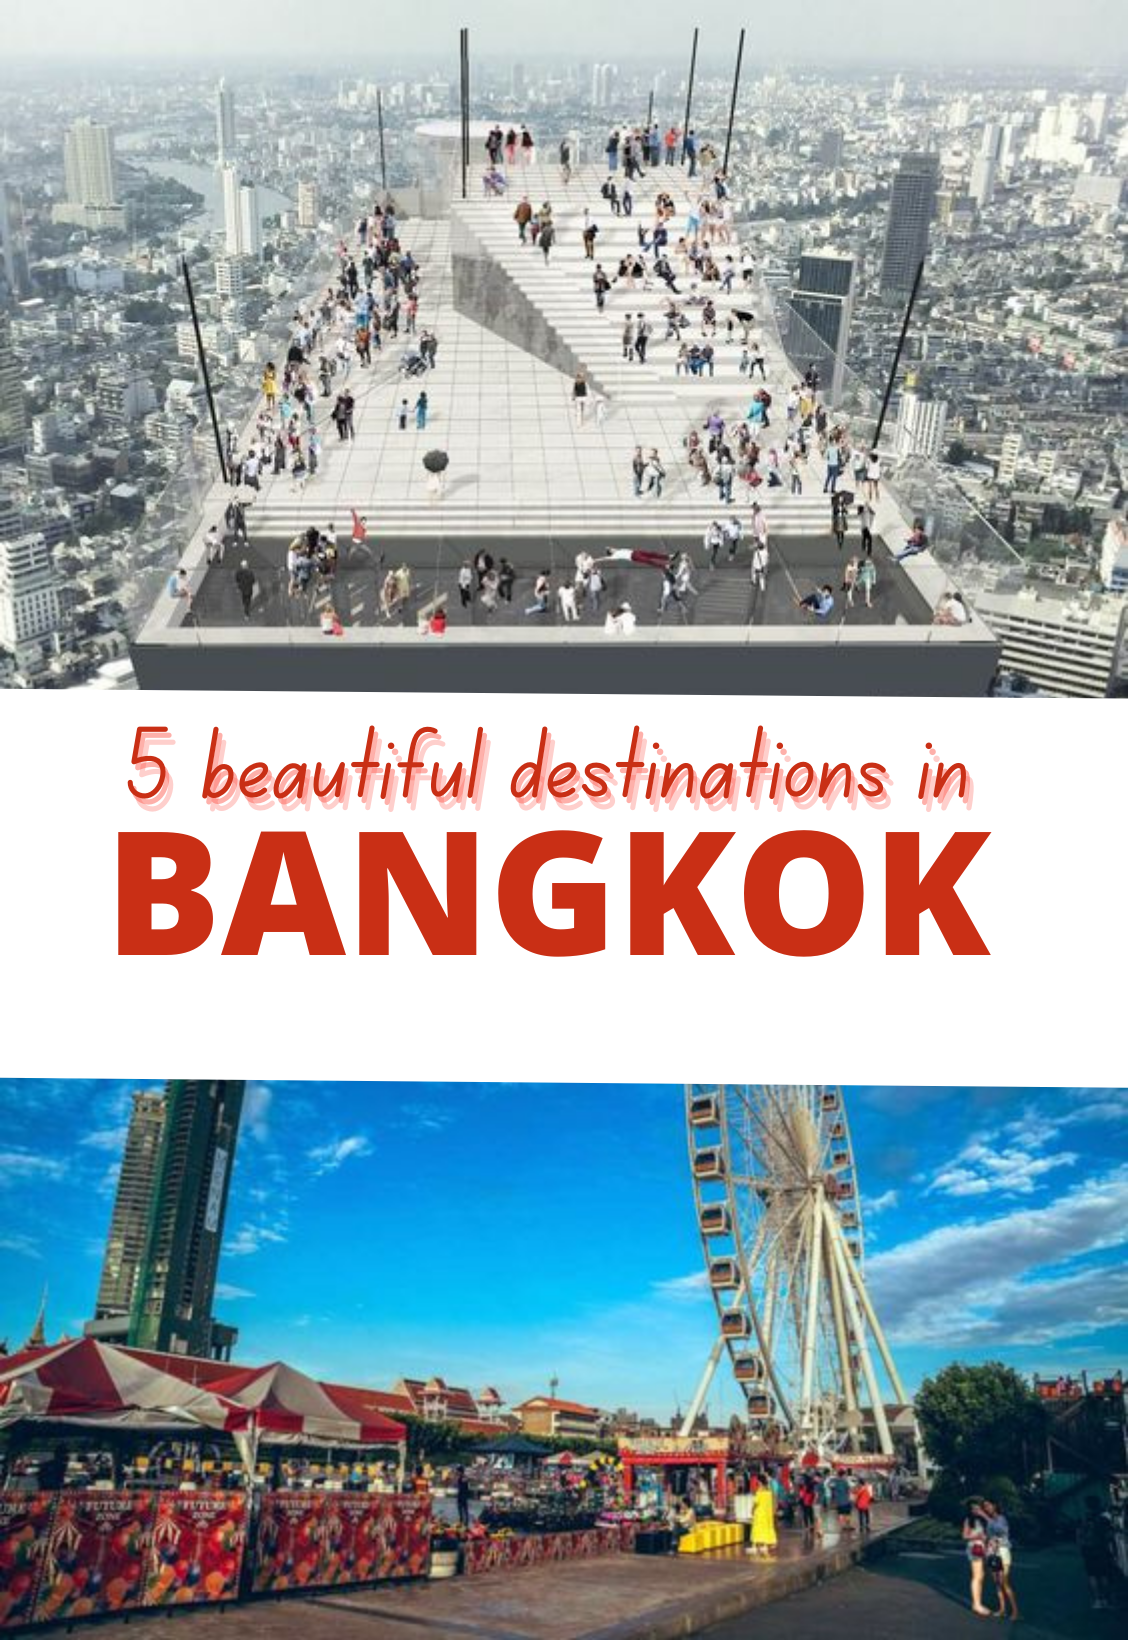 5 beautiful destinations in BangKoK - Thailand